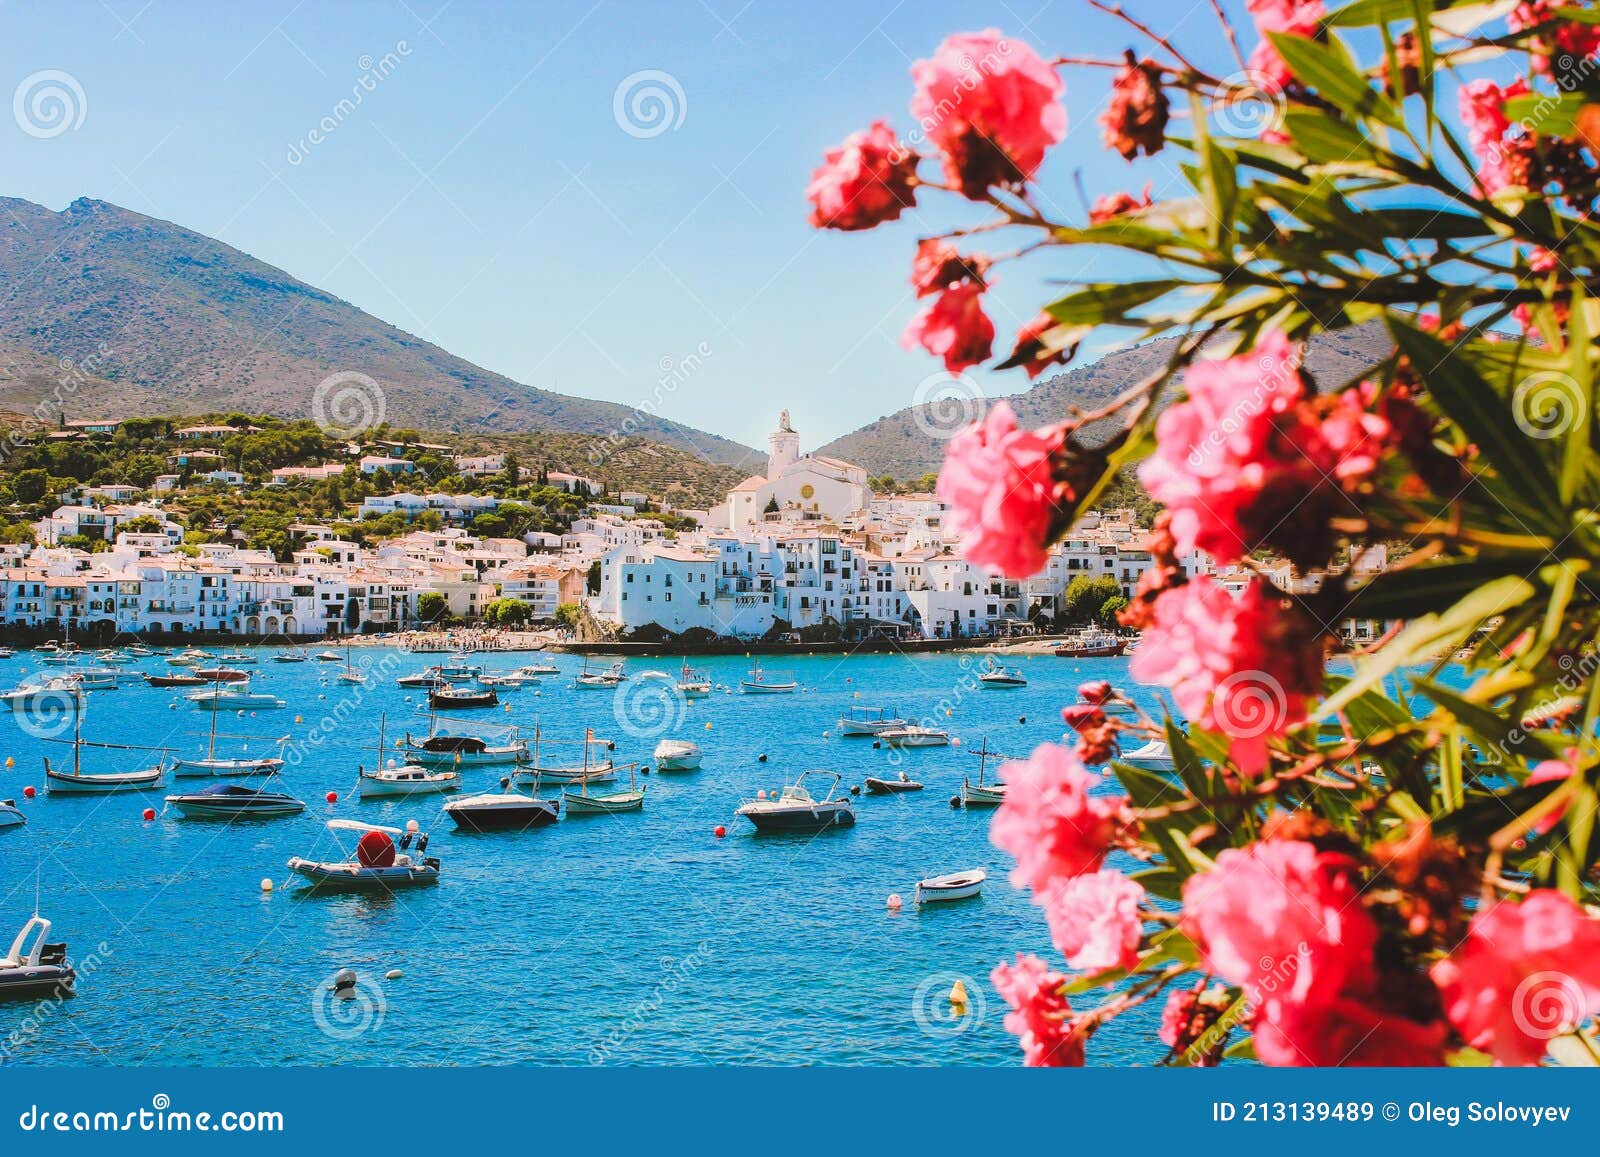 mediterranean coast. white houses, turquose sea and yachts. cadaquÃÂ©s spain.